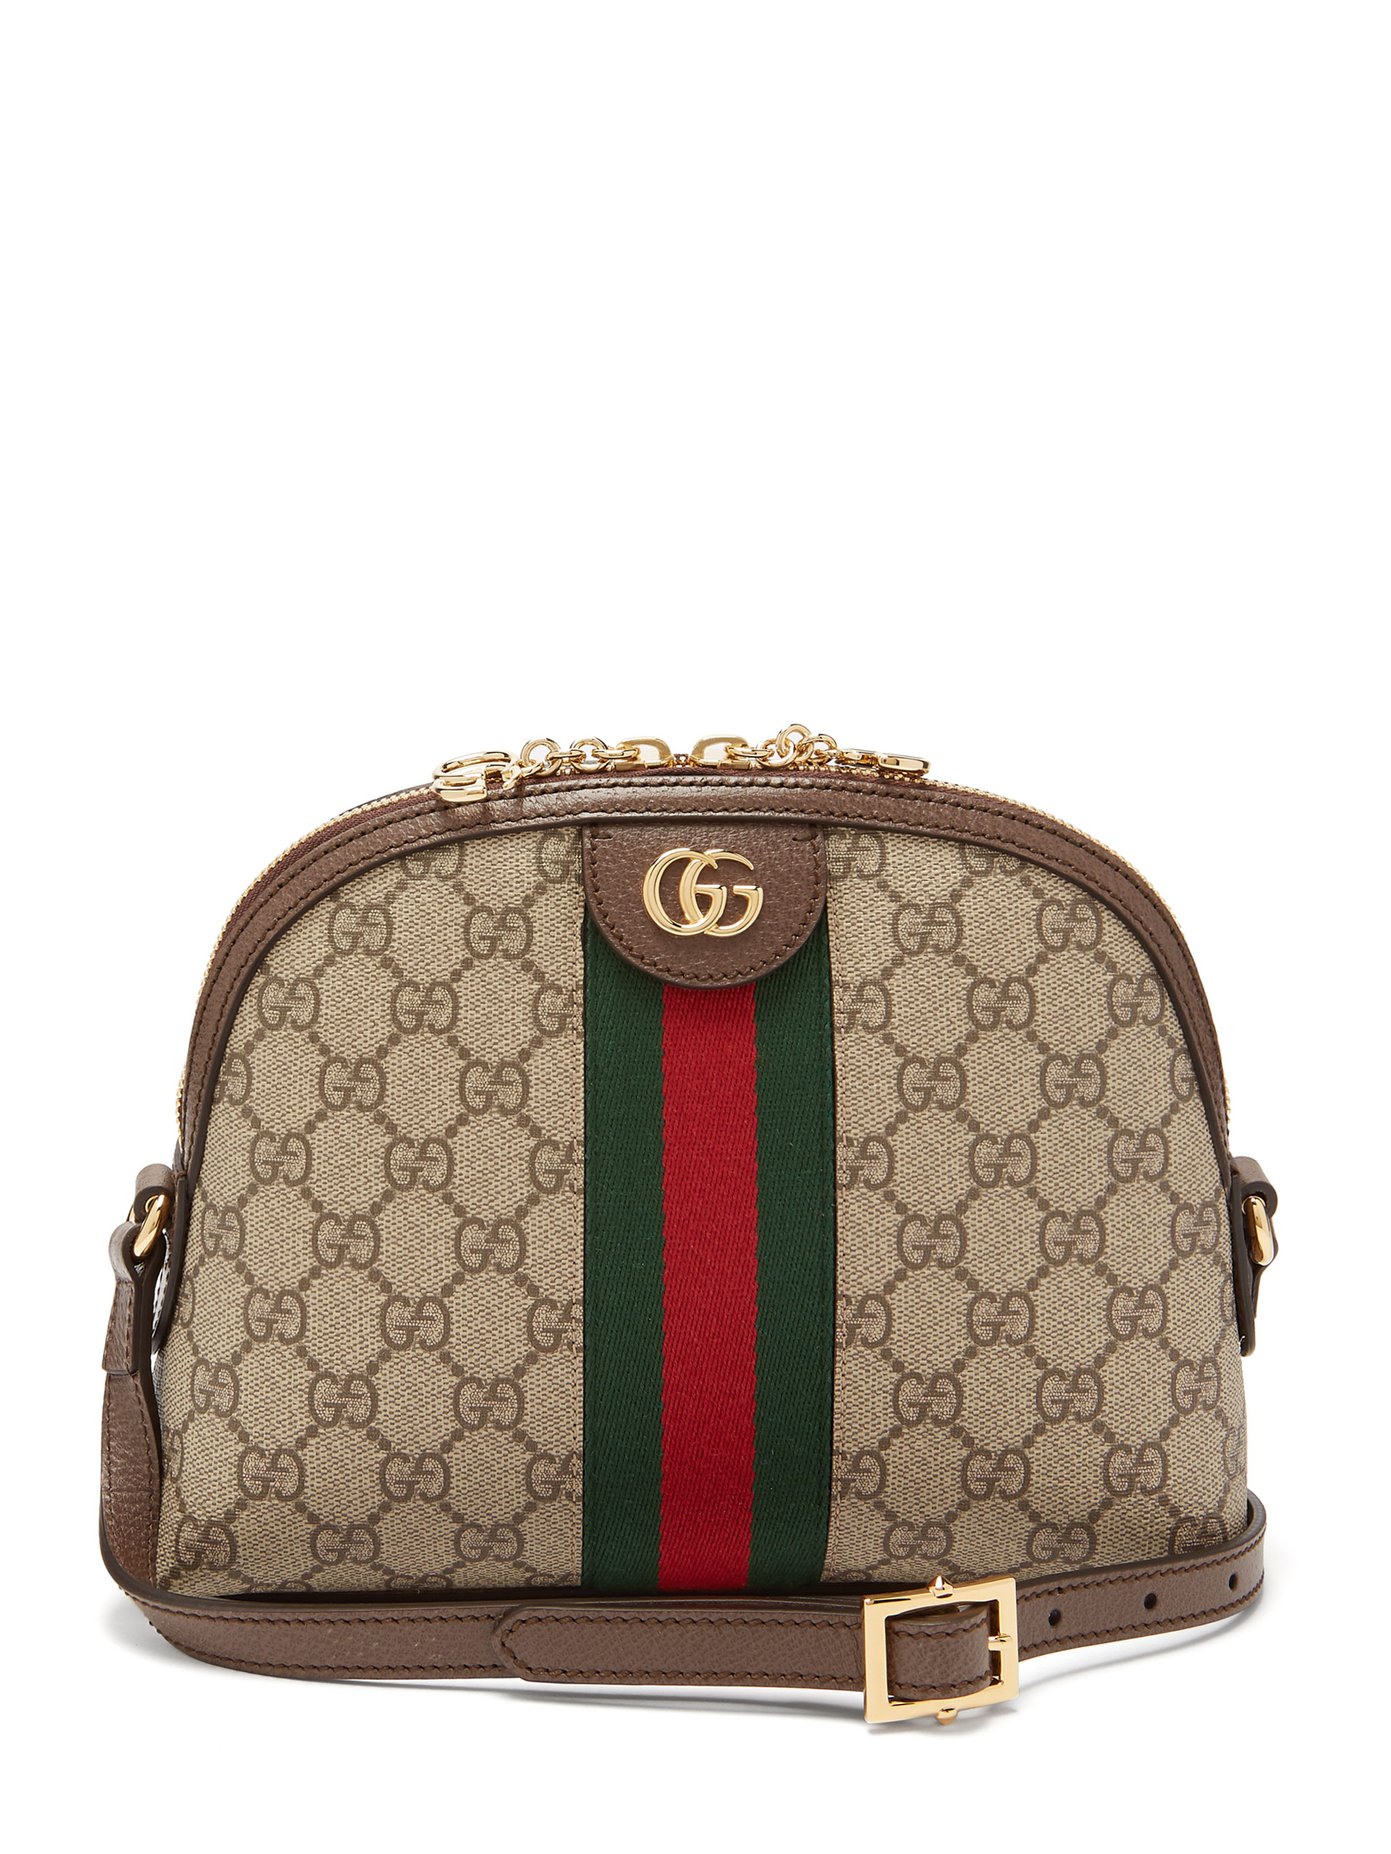 Gucci Ophidia Gg Supreme on Sale, 60% OFF | www.ingeniovirtual.com